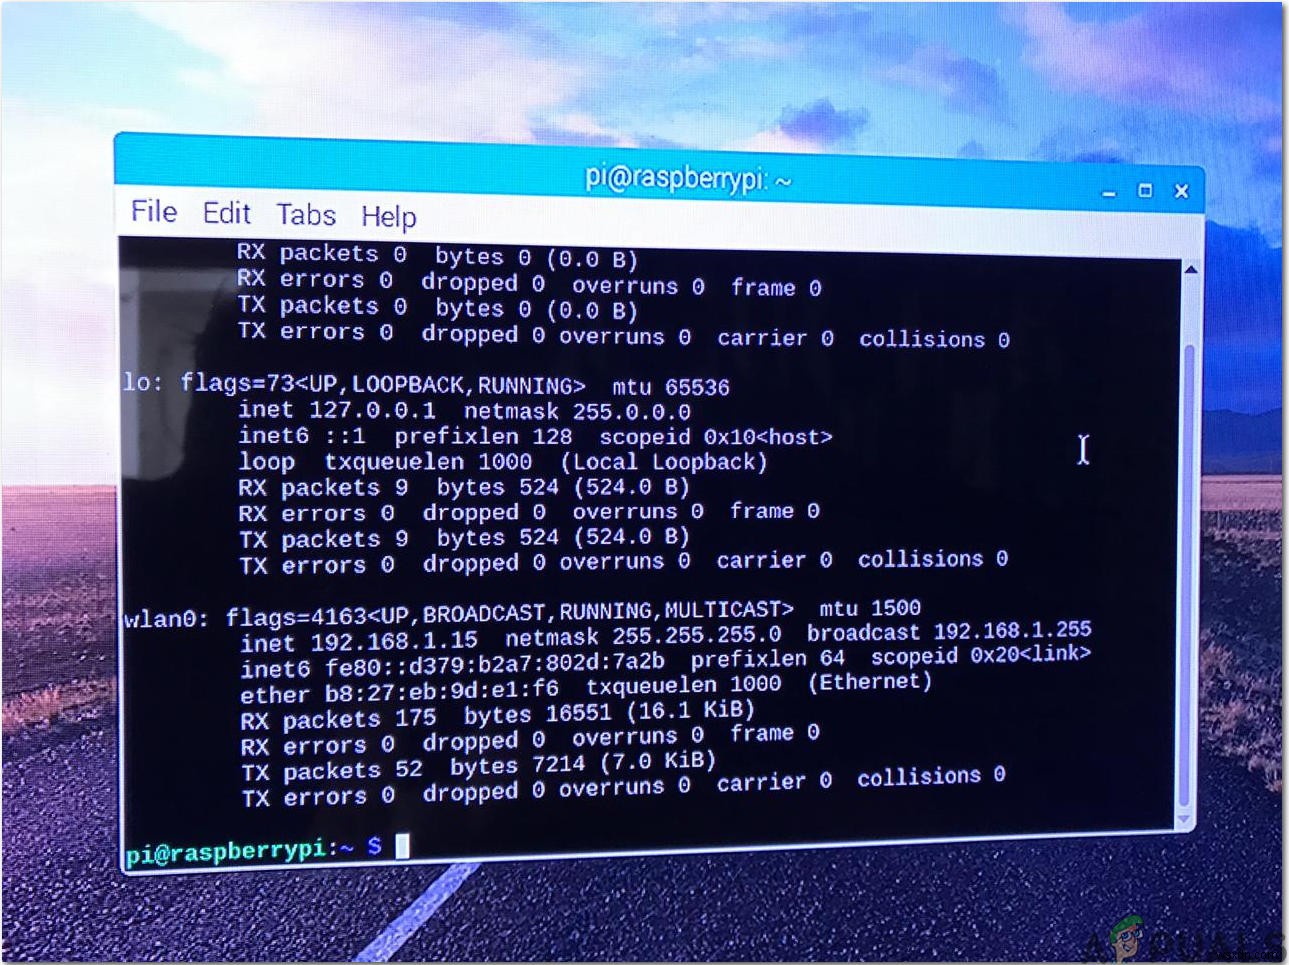 SSH 및 VNC 뷰어를 사용하여 Raspberry Pi의 그래픽 사용자 인터페이스(GUI)에 액세스하는 방법은 무엇입니까? 